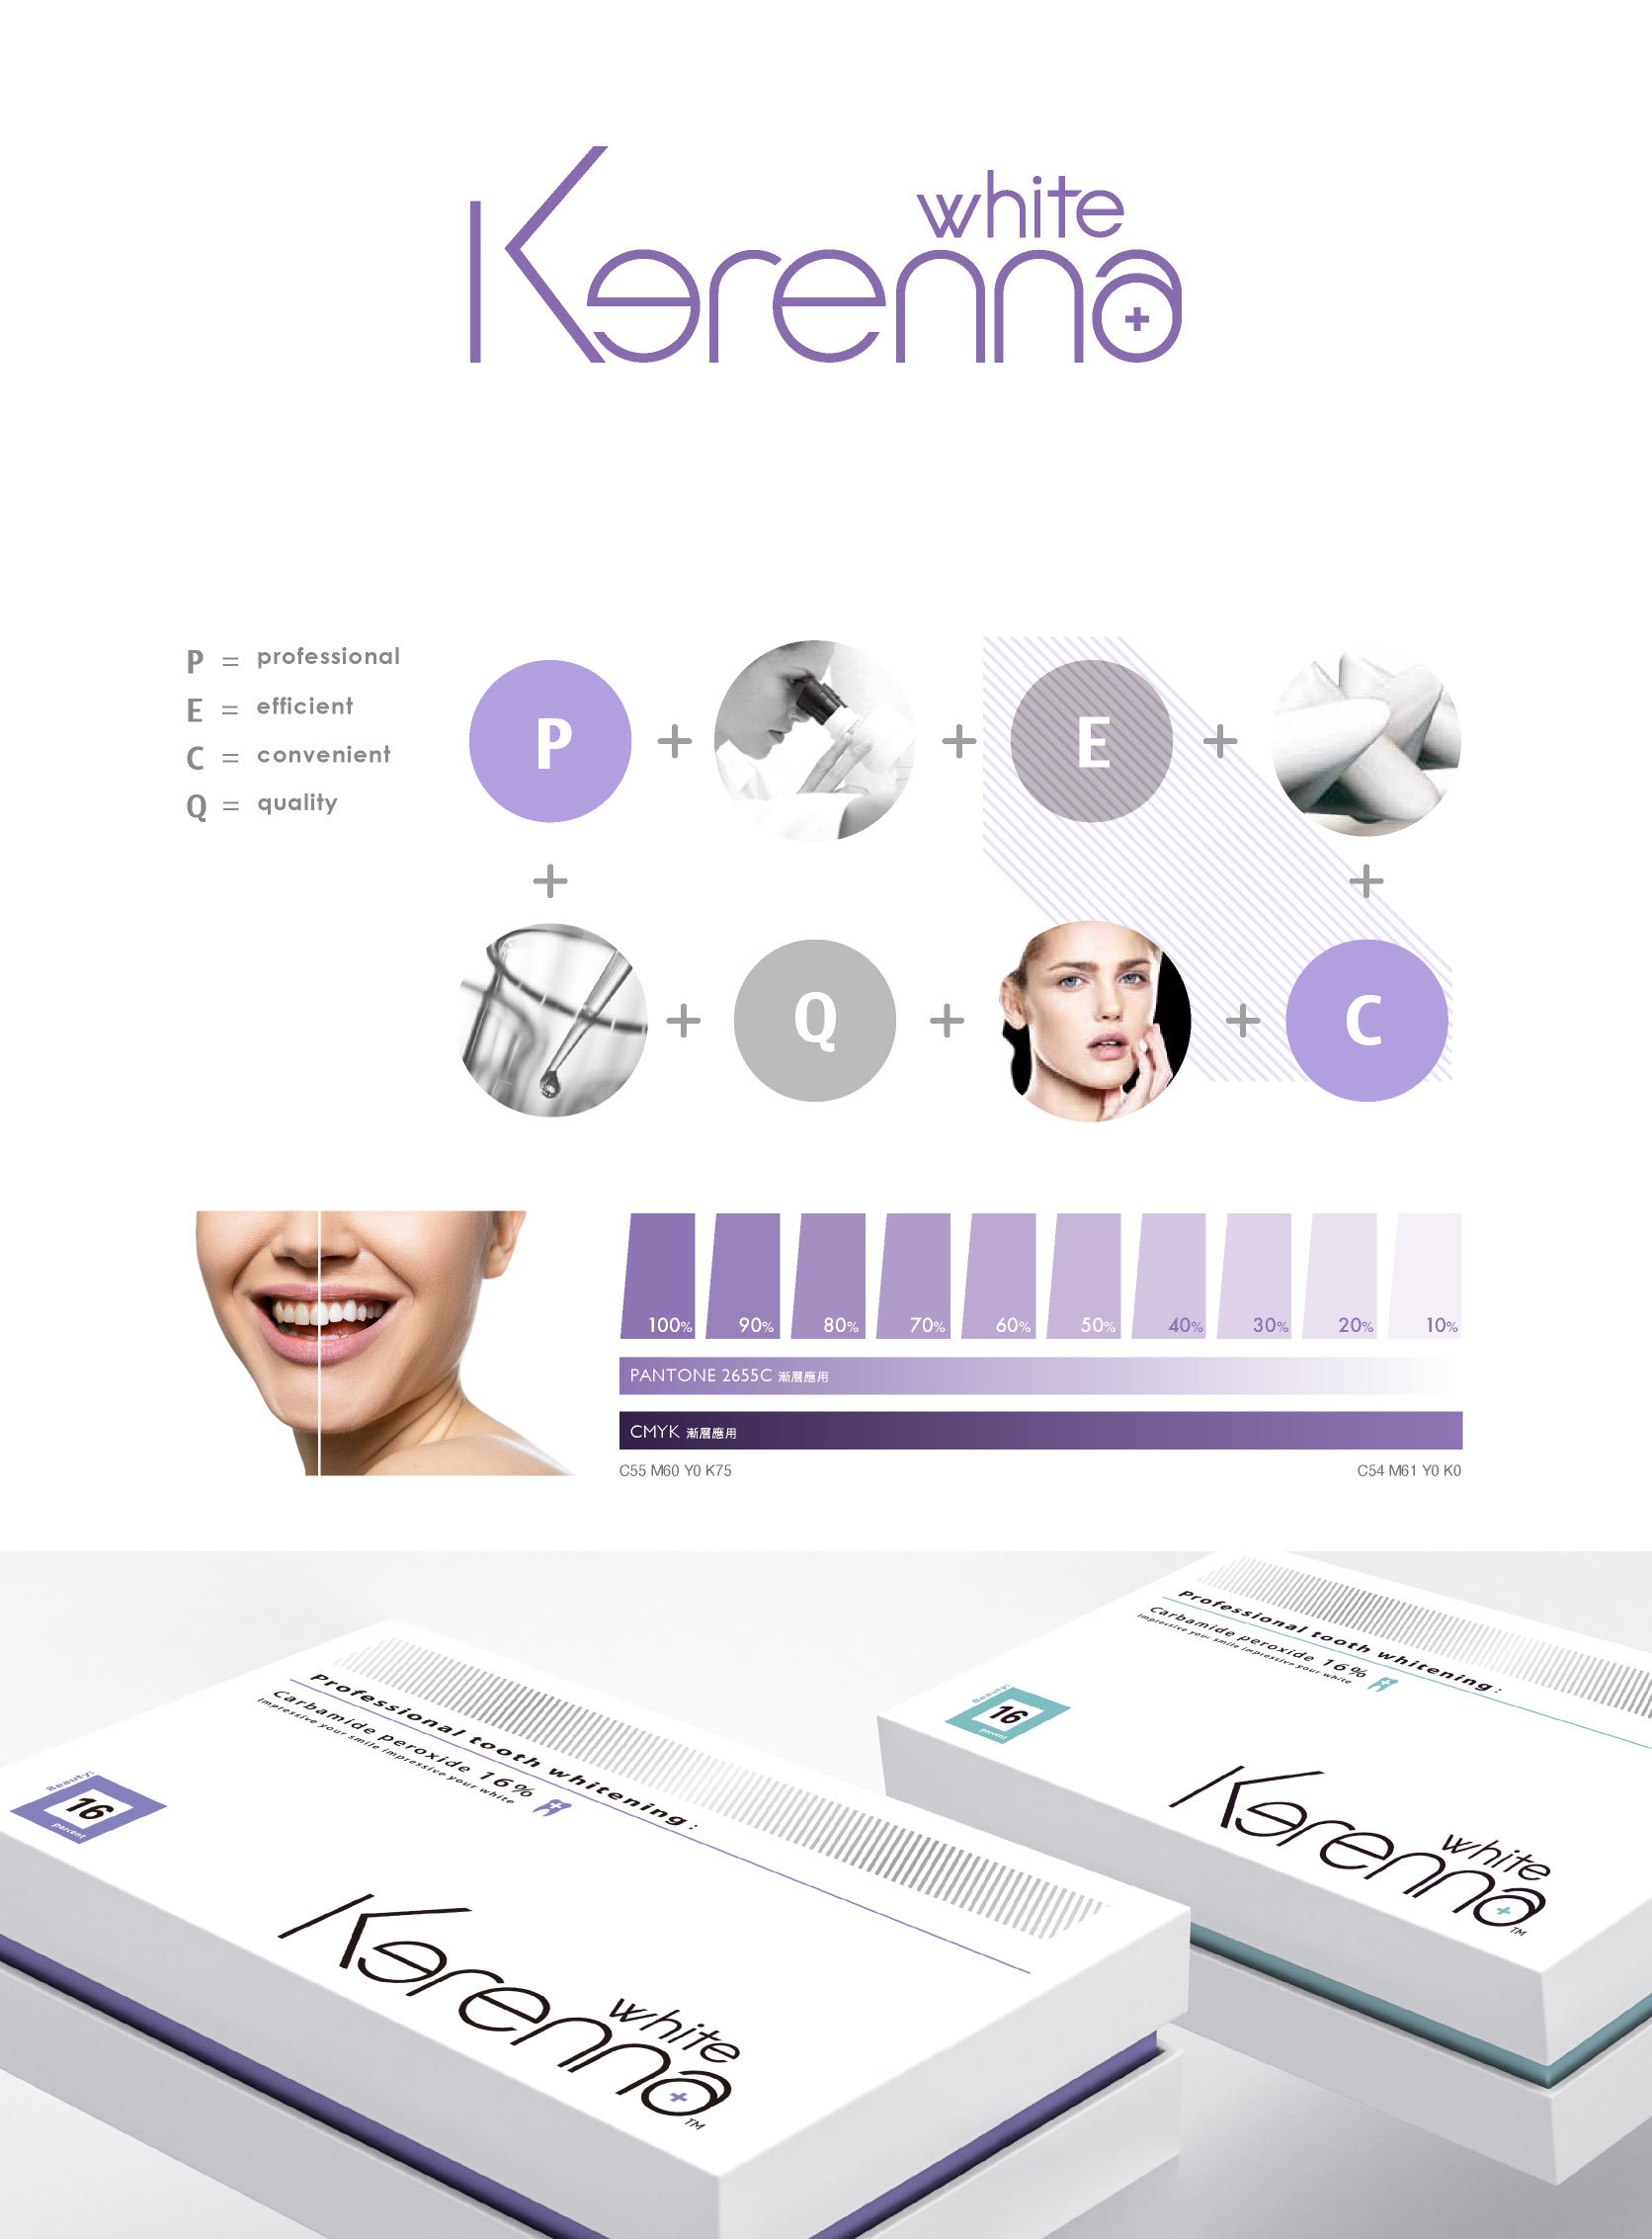 Kerenna Brand Positioning and Identity Design